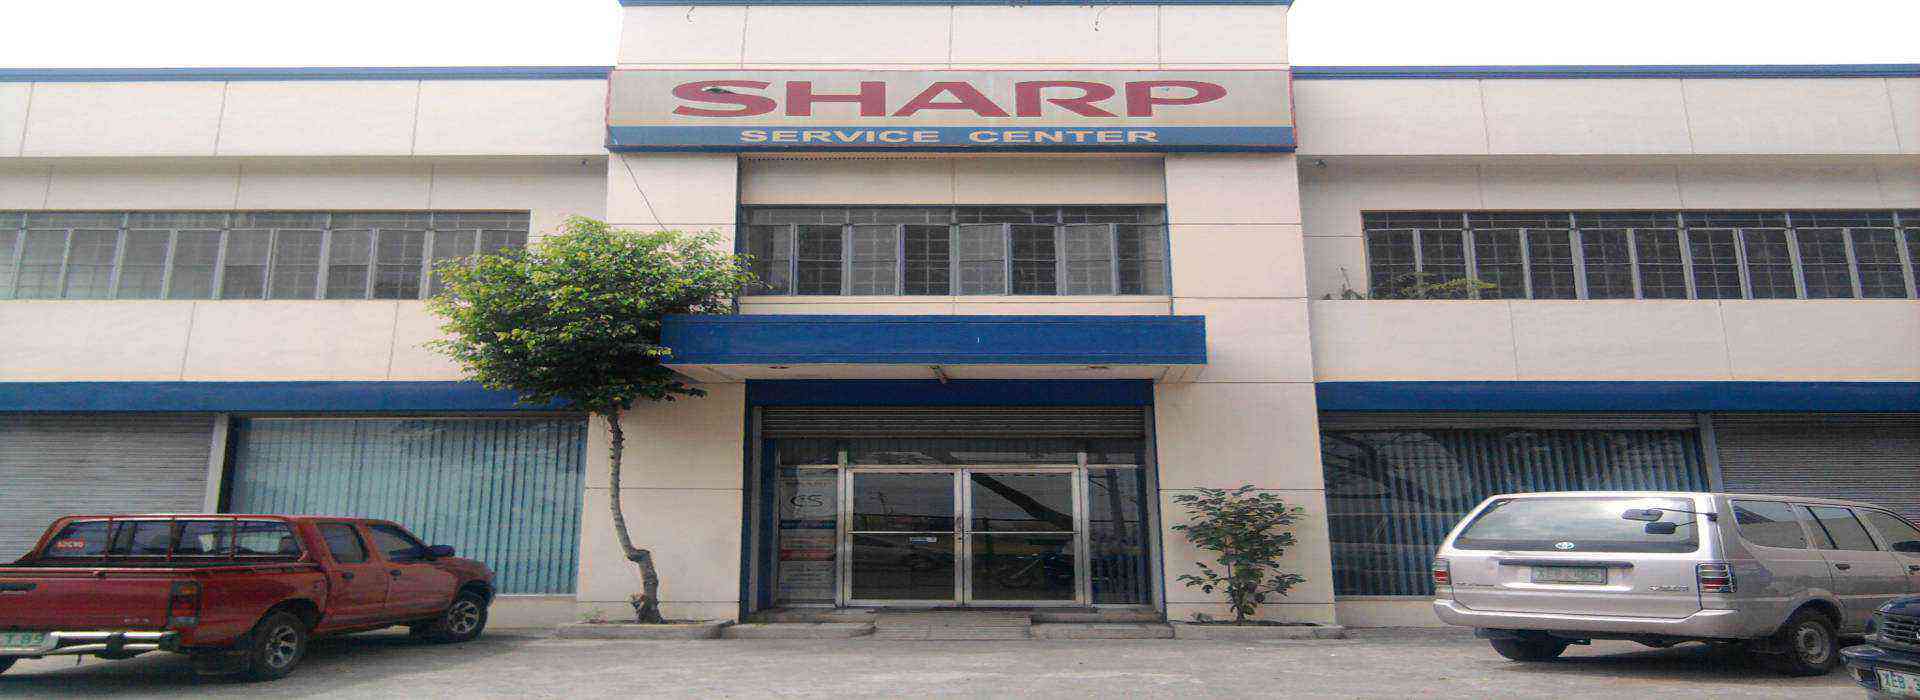 Sharp Service Center Malaysia - Sharp Phils Oral Presentation - Sharp